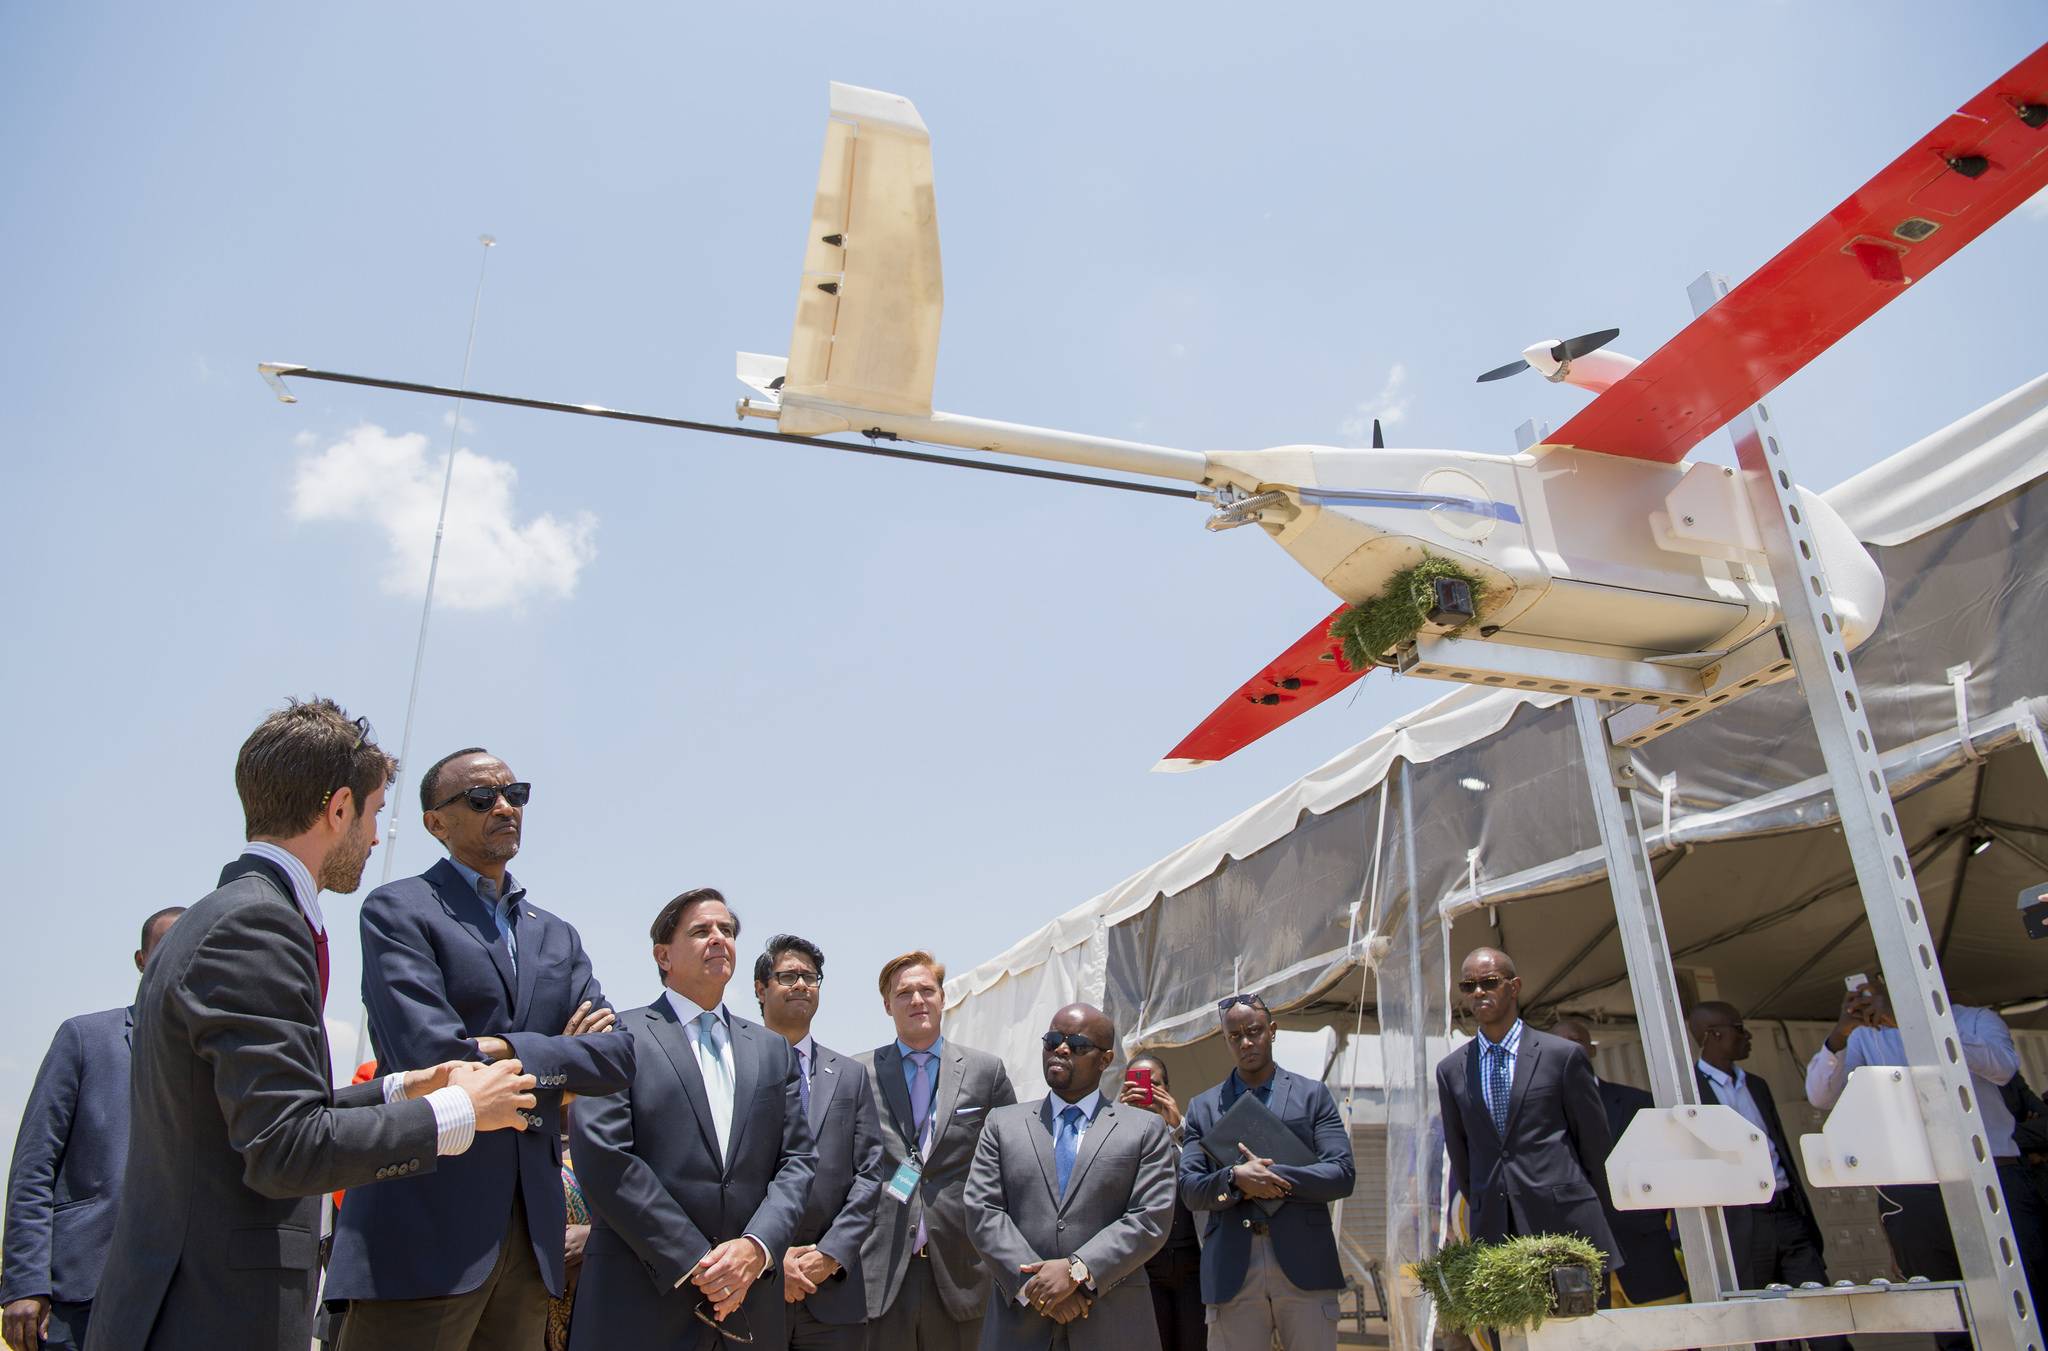 Rwanda’s Drones Complete 25,000 Flights in Blood, Medicine Delivery